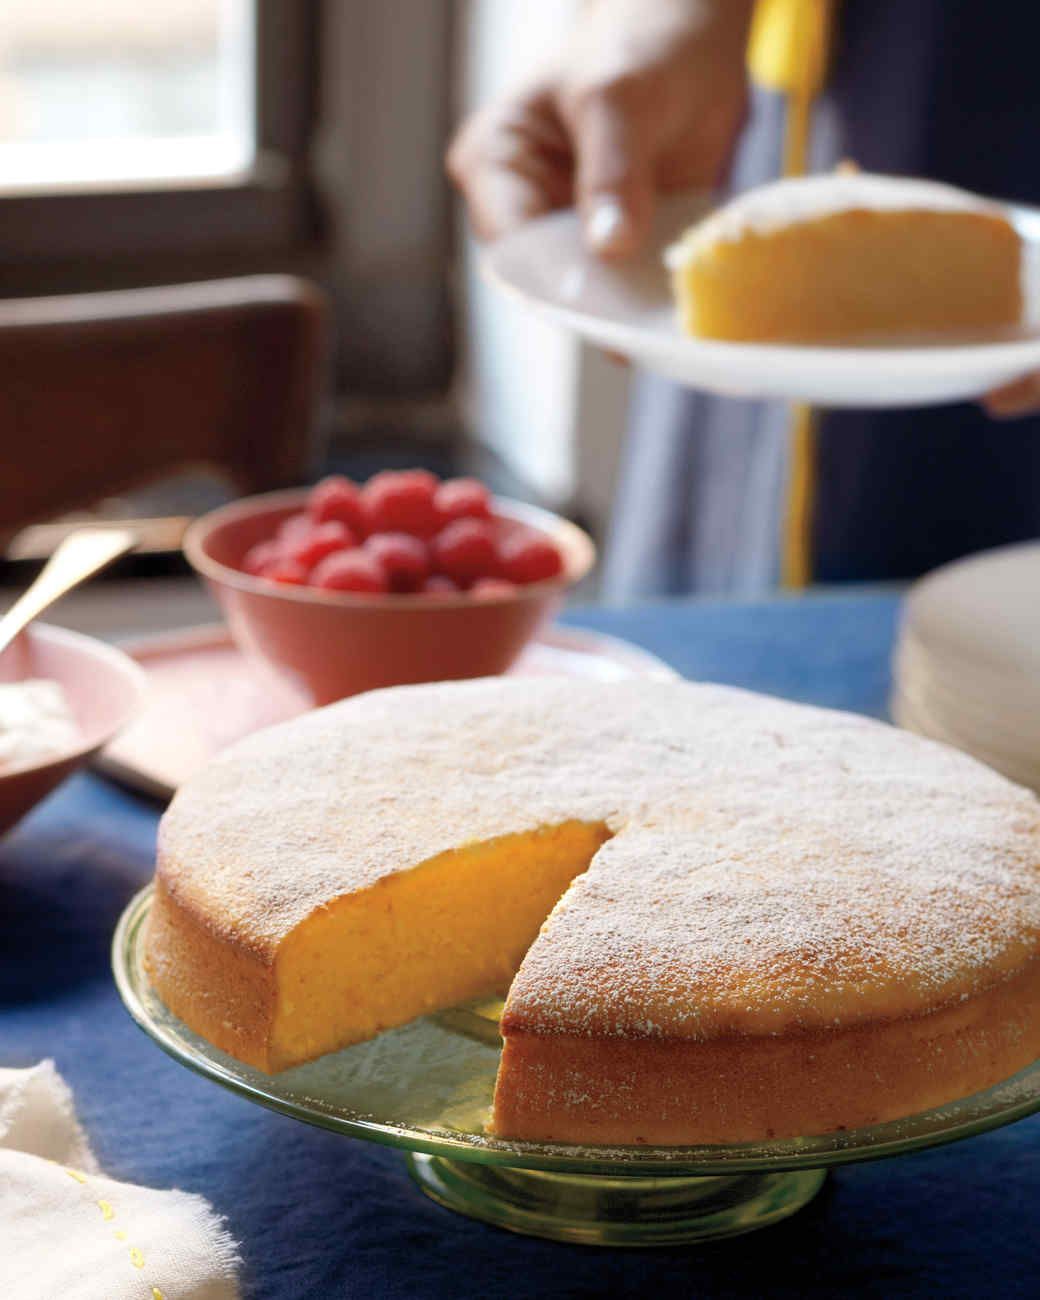 16 cake Simple martha stewart ideas